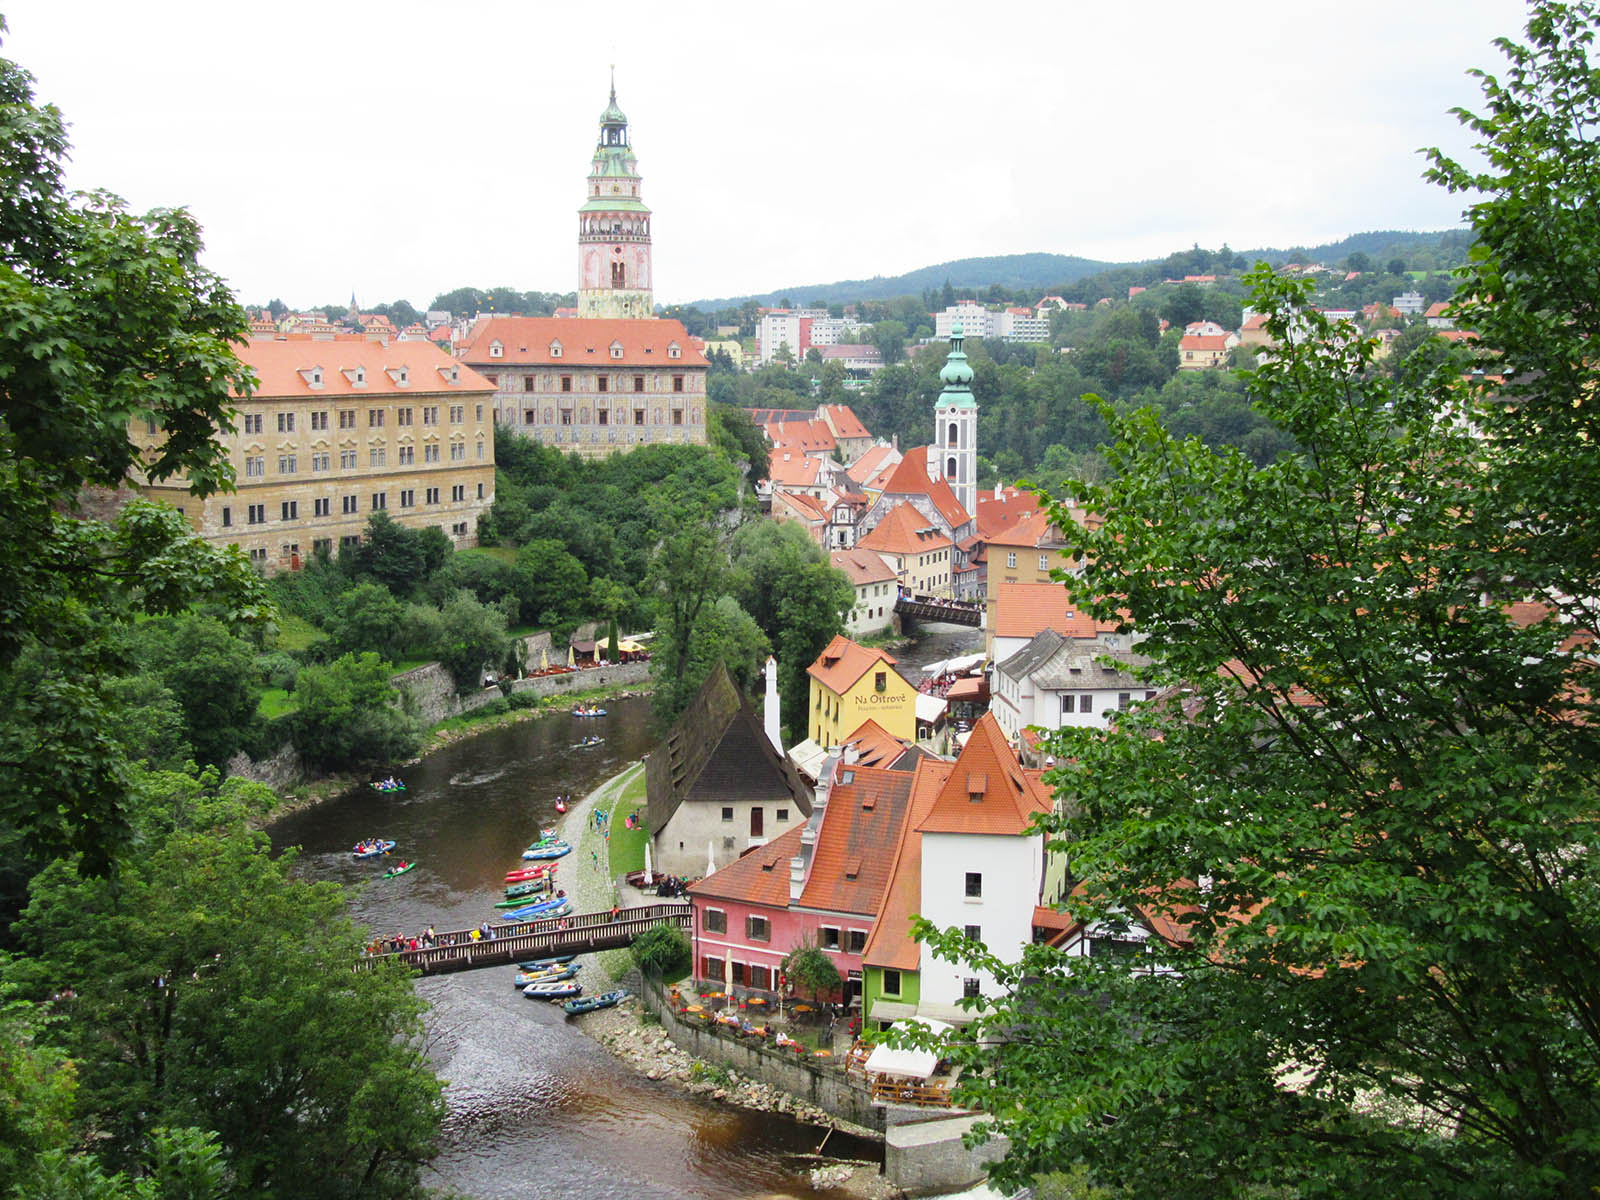 The picturesque town of Český Krumlov. Credit: Carolina Valenzuela